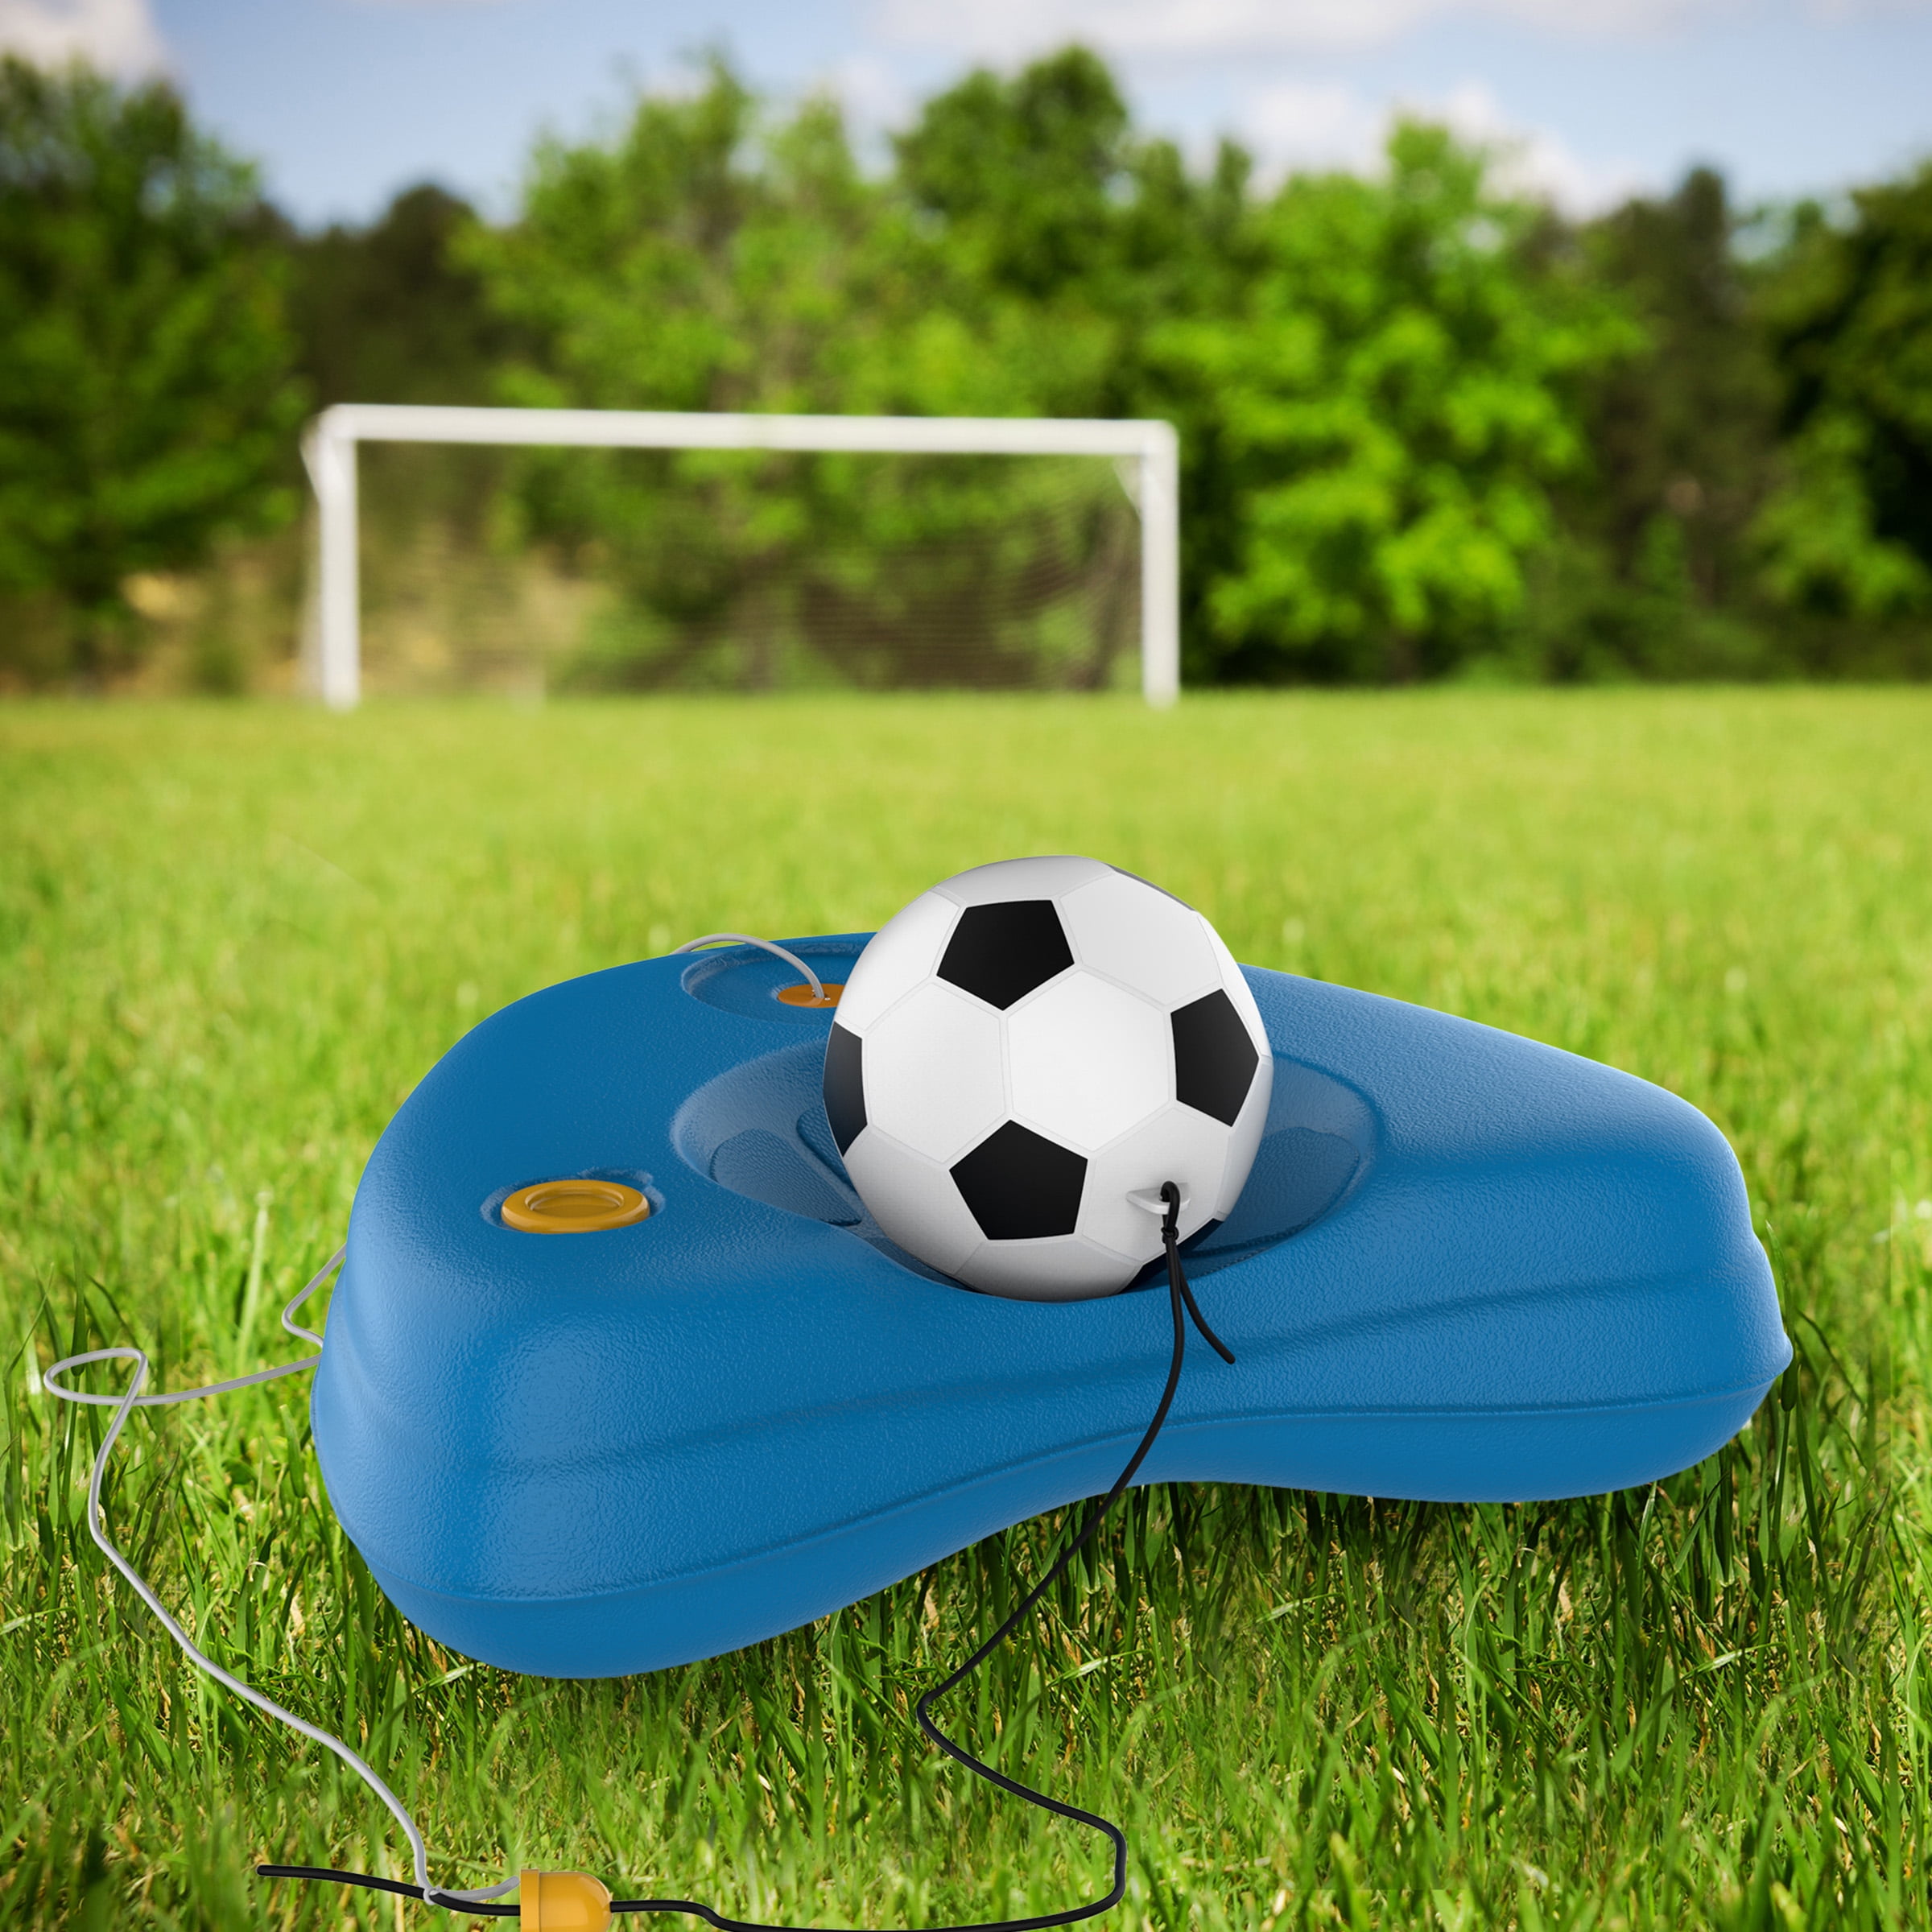 Futtymania Football Kicker Training Belt Aid Solo Practice Ball Mastery Training Equipment Adjustable Waist Belt ChildrenÕs